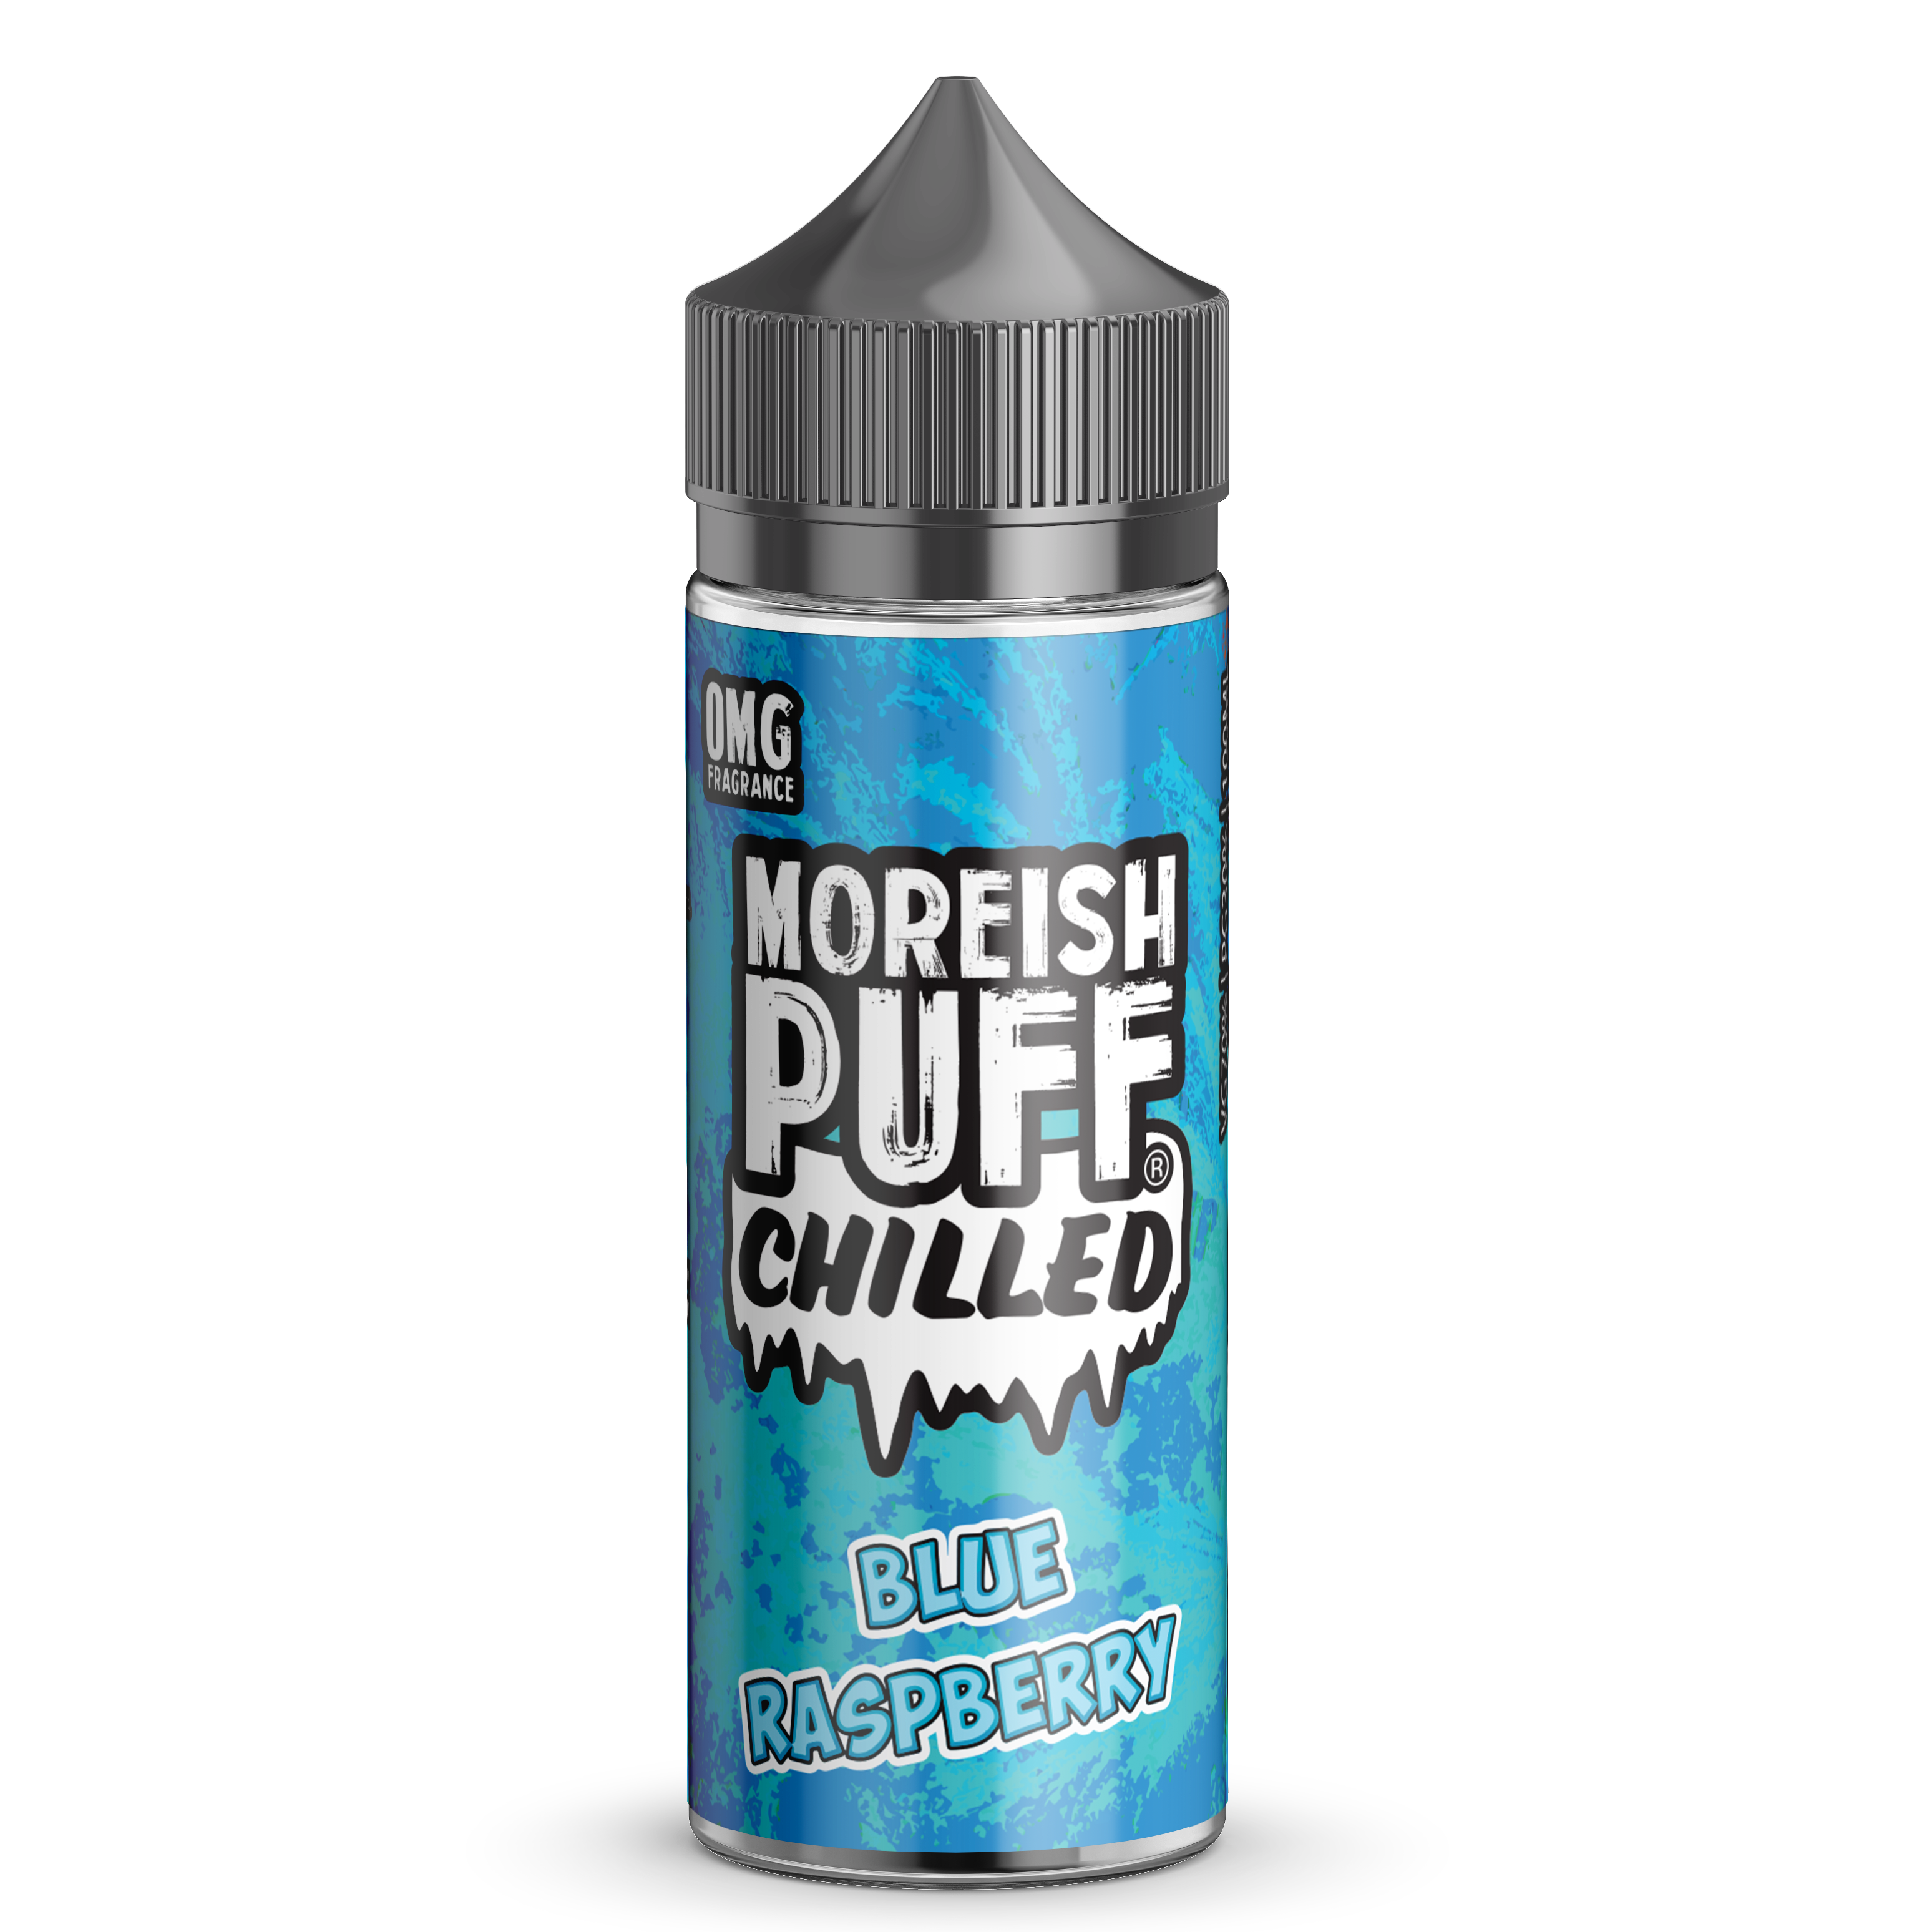 Chilled Blue Raspberry E-Liquid by Moreish Puff 100ml Shortfill